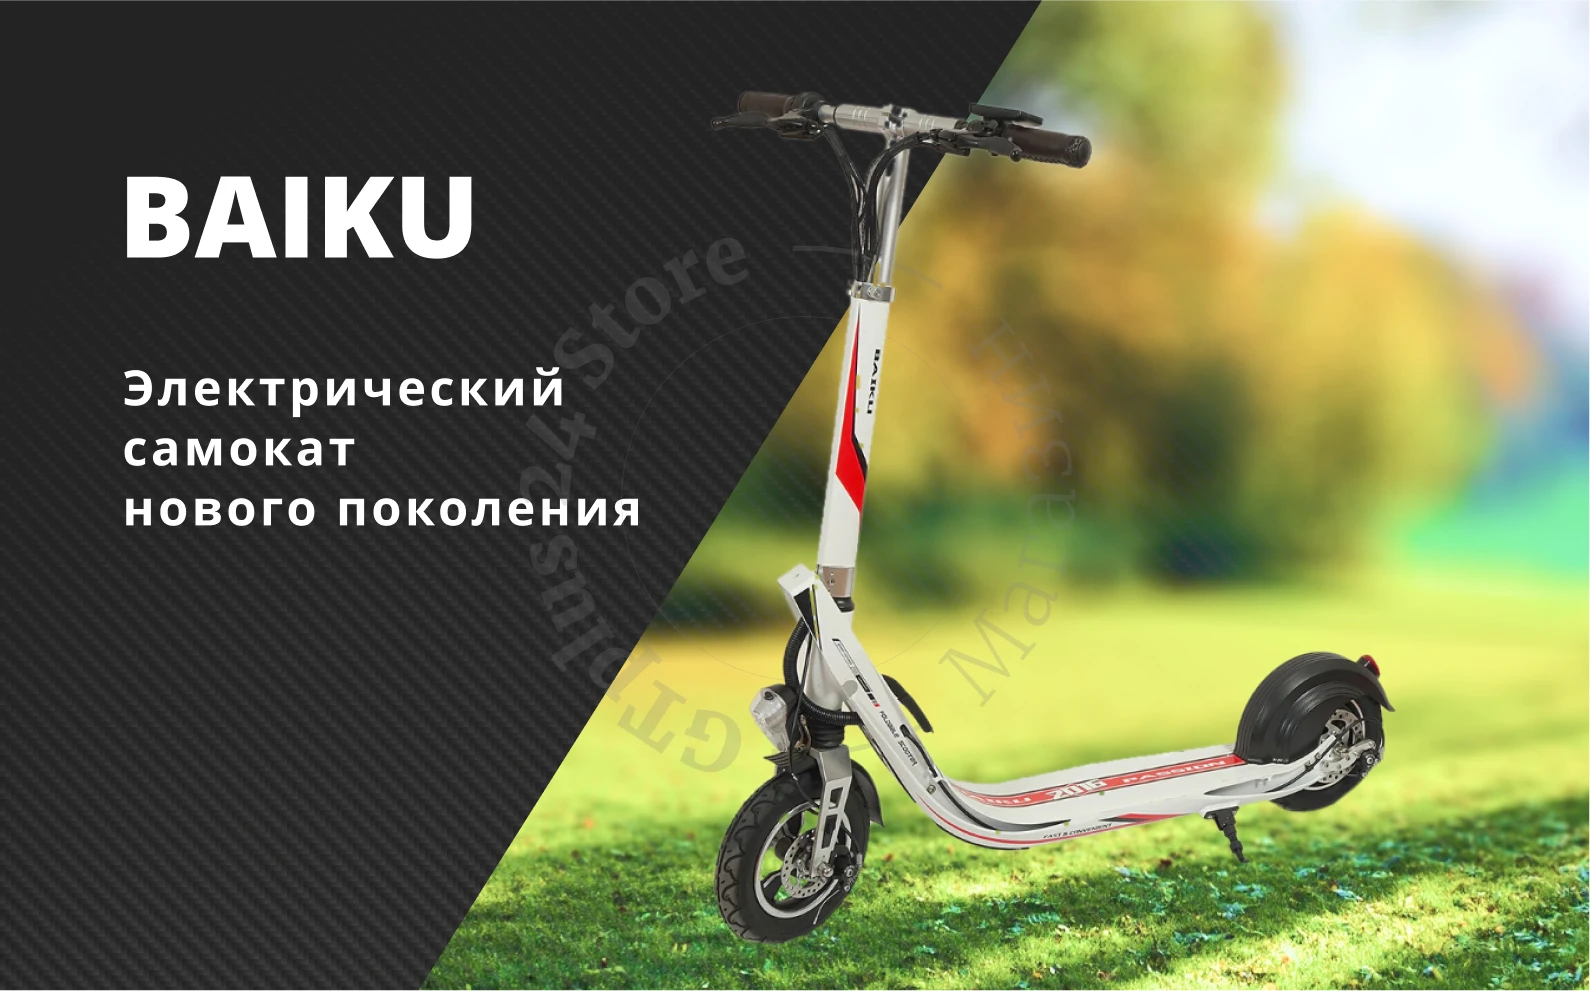 Baiku Passion Электросамокат, электрический самокат, электрический скутер Baiku Passion